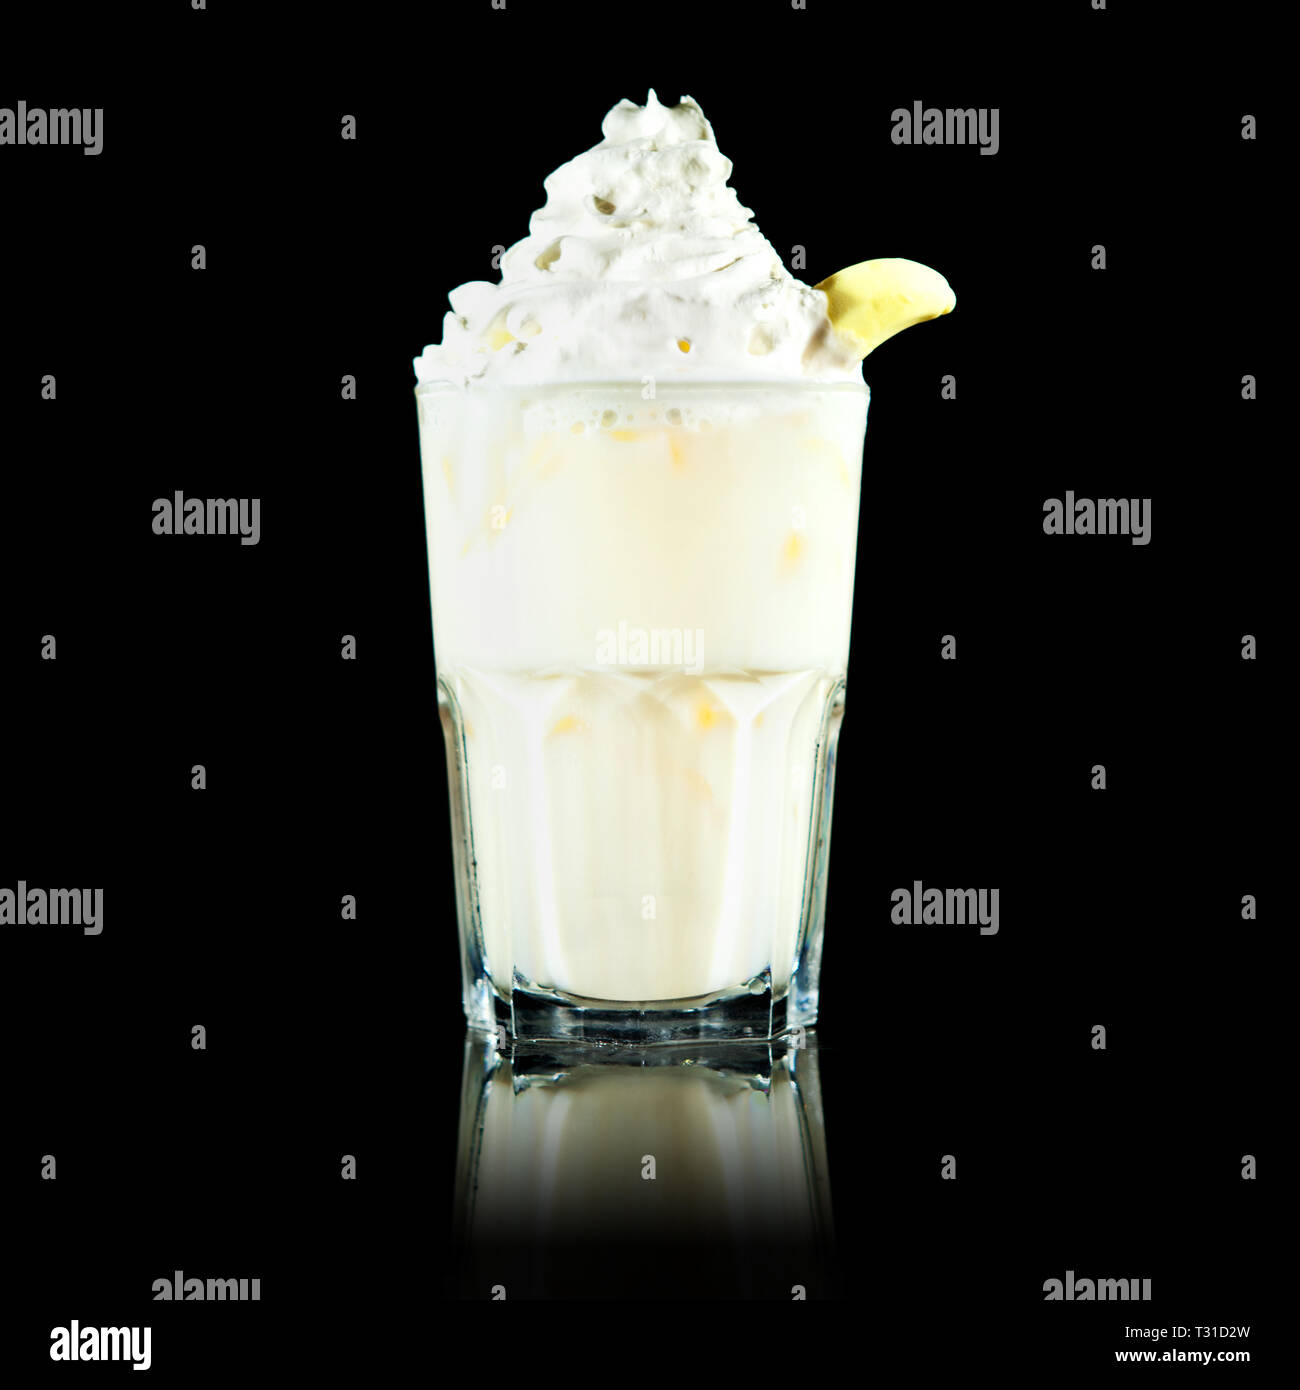 banana milkshake or cocktail on a black background Stock Photo